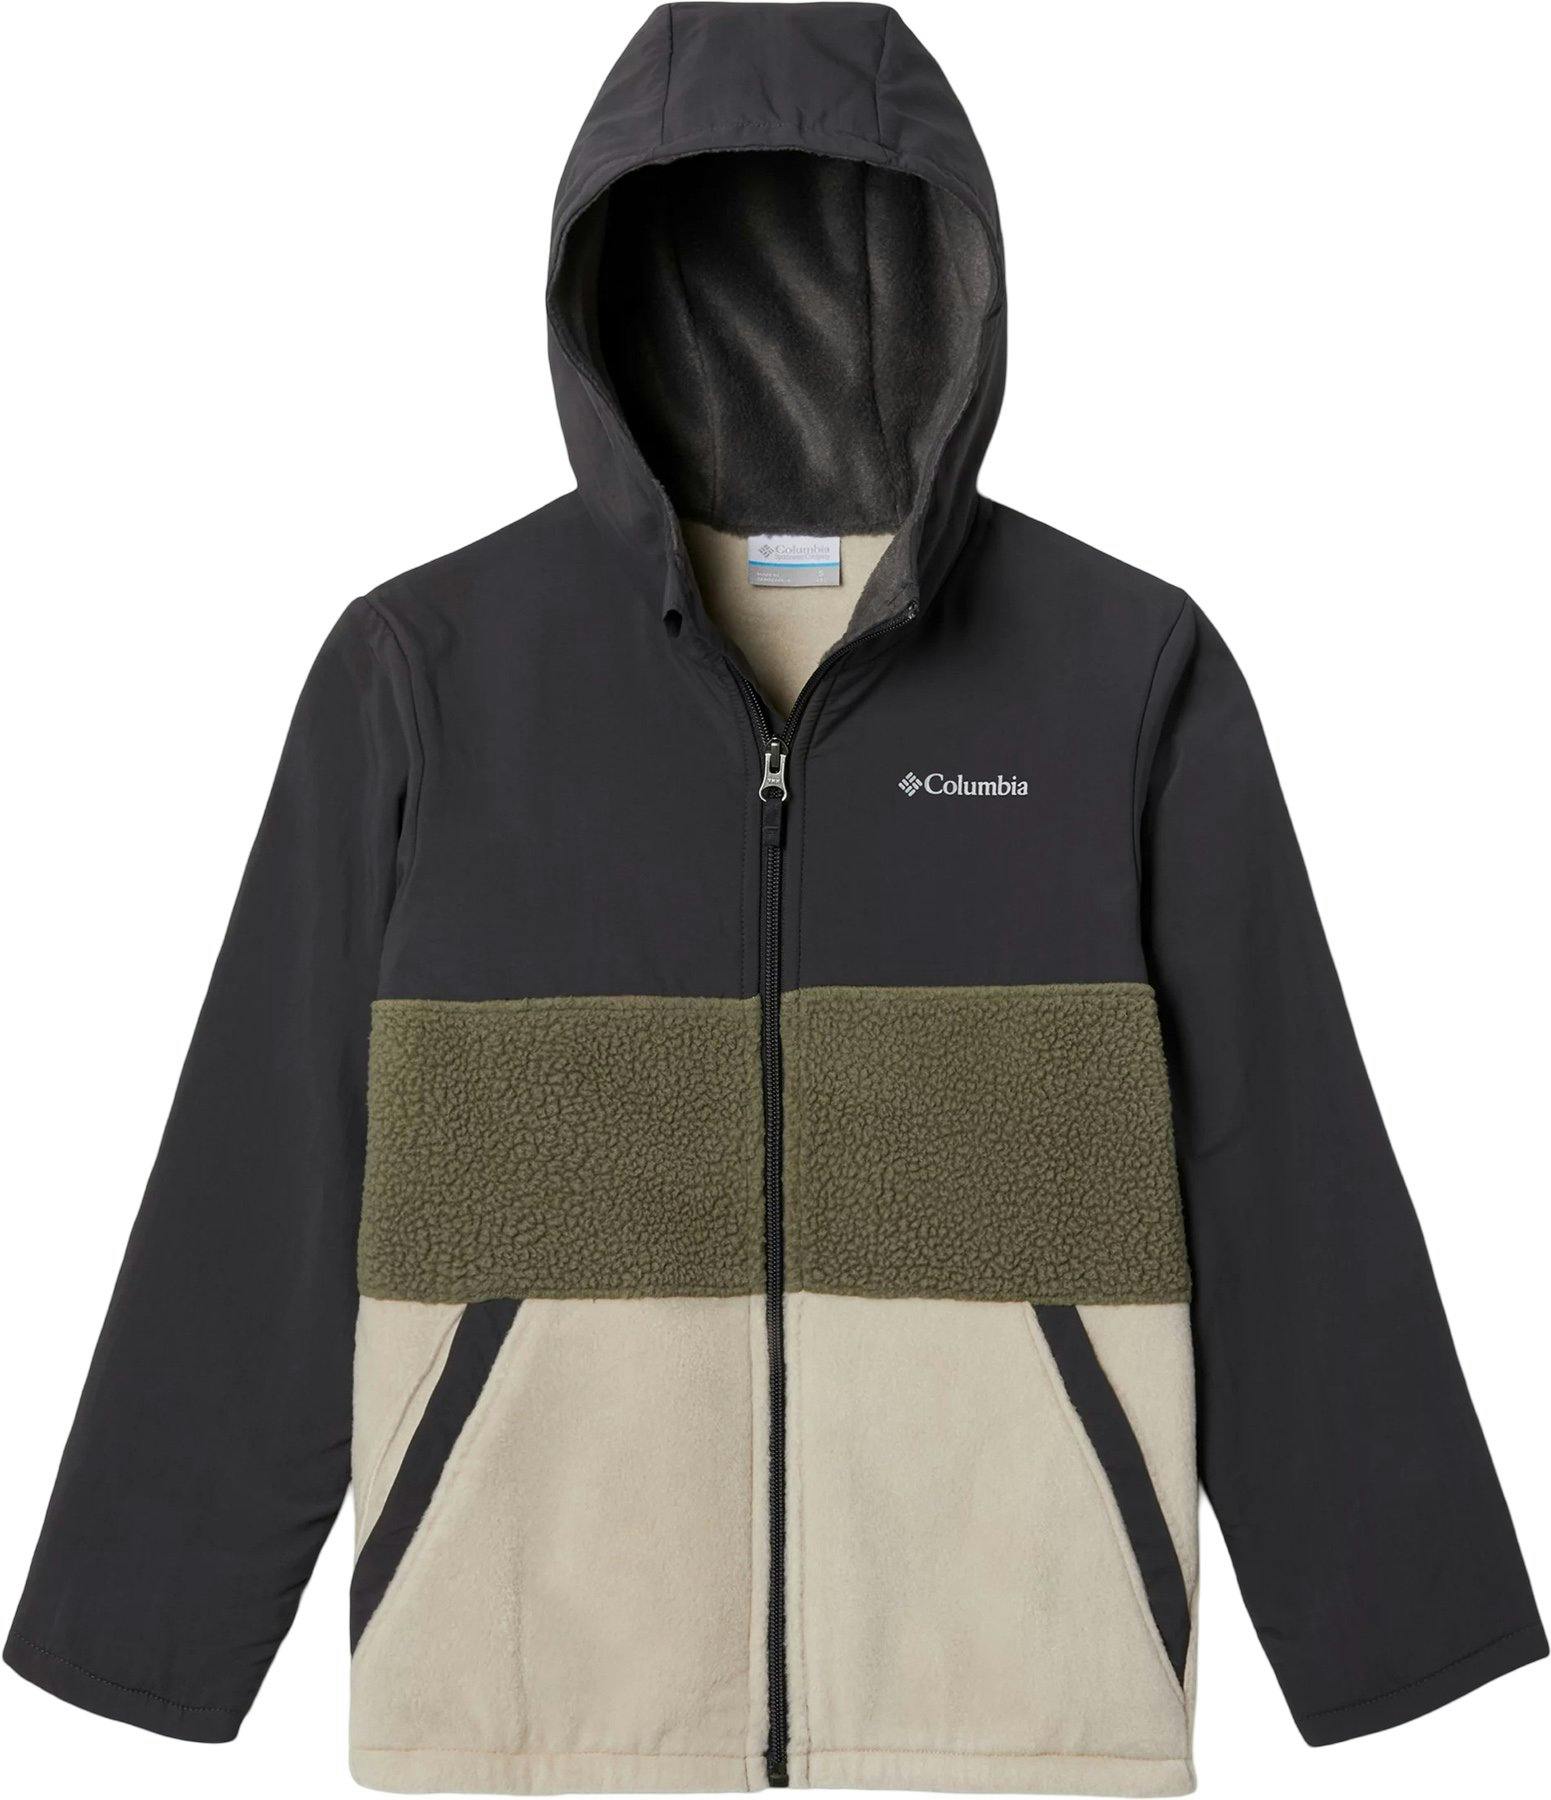 Product image for Steens Mtn Novelty Full Zip Hooded Fleece Jacket - Boys